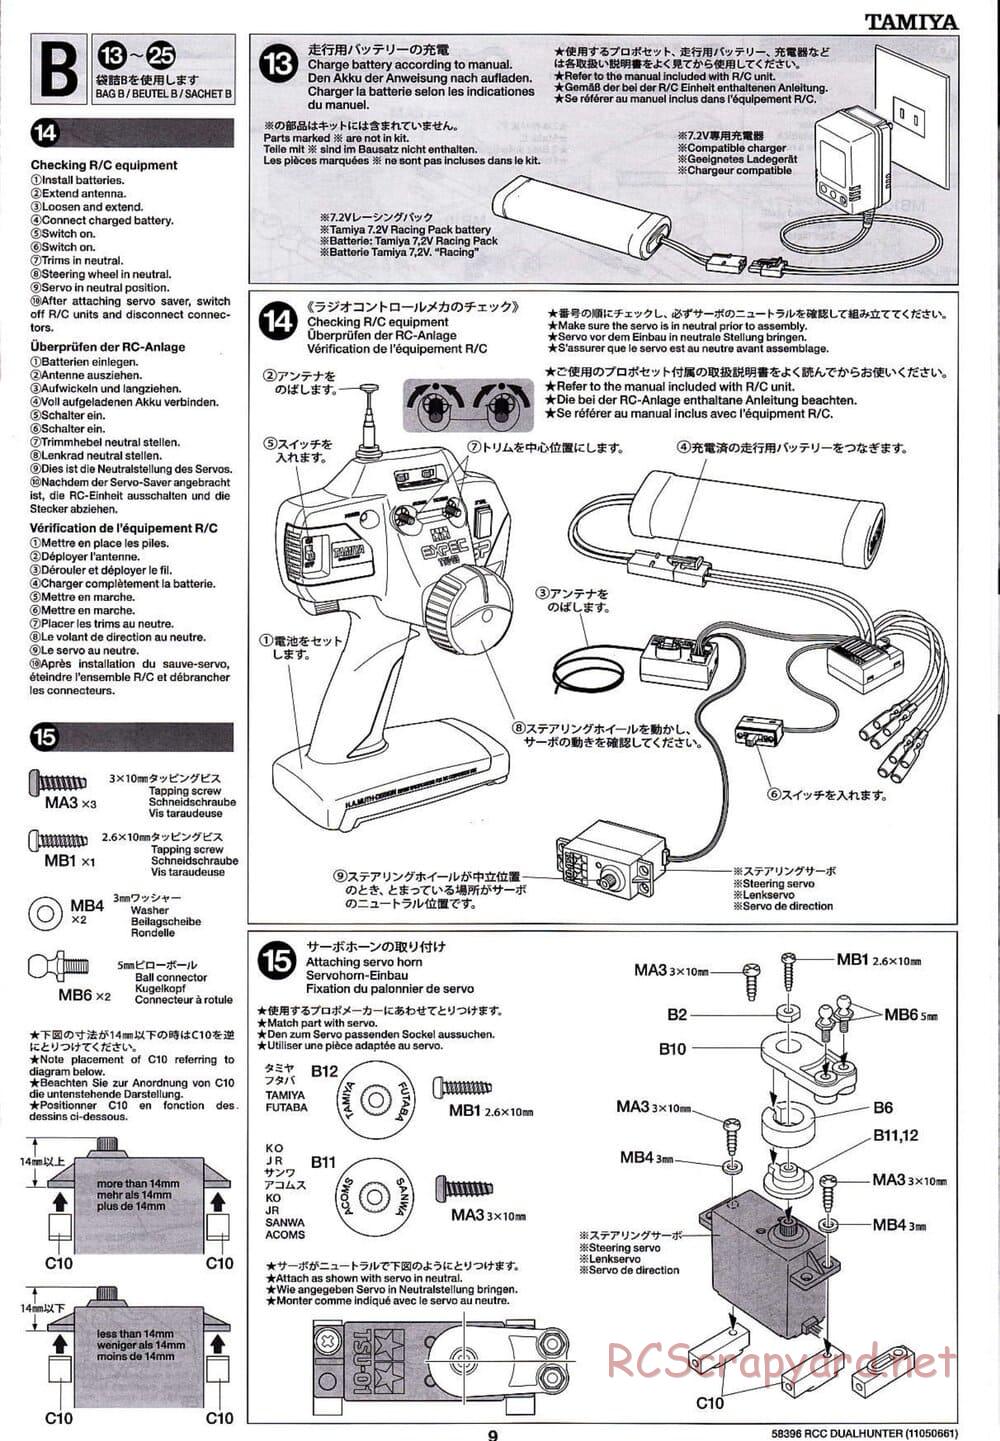 Tamiya - Dualhunter - WR-01 Chassis - Manual - Page 9